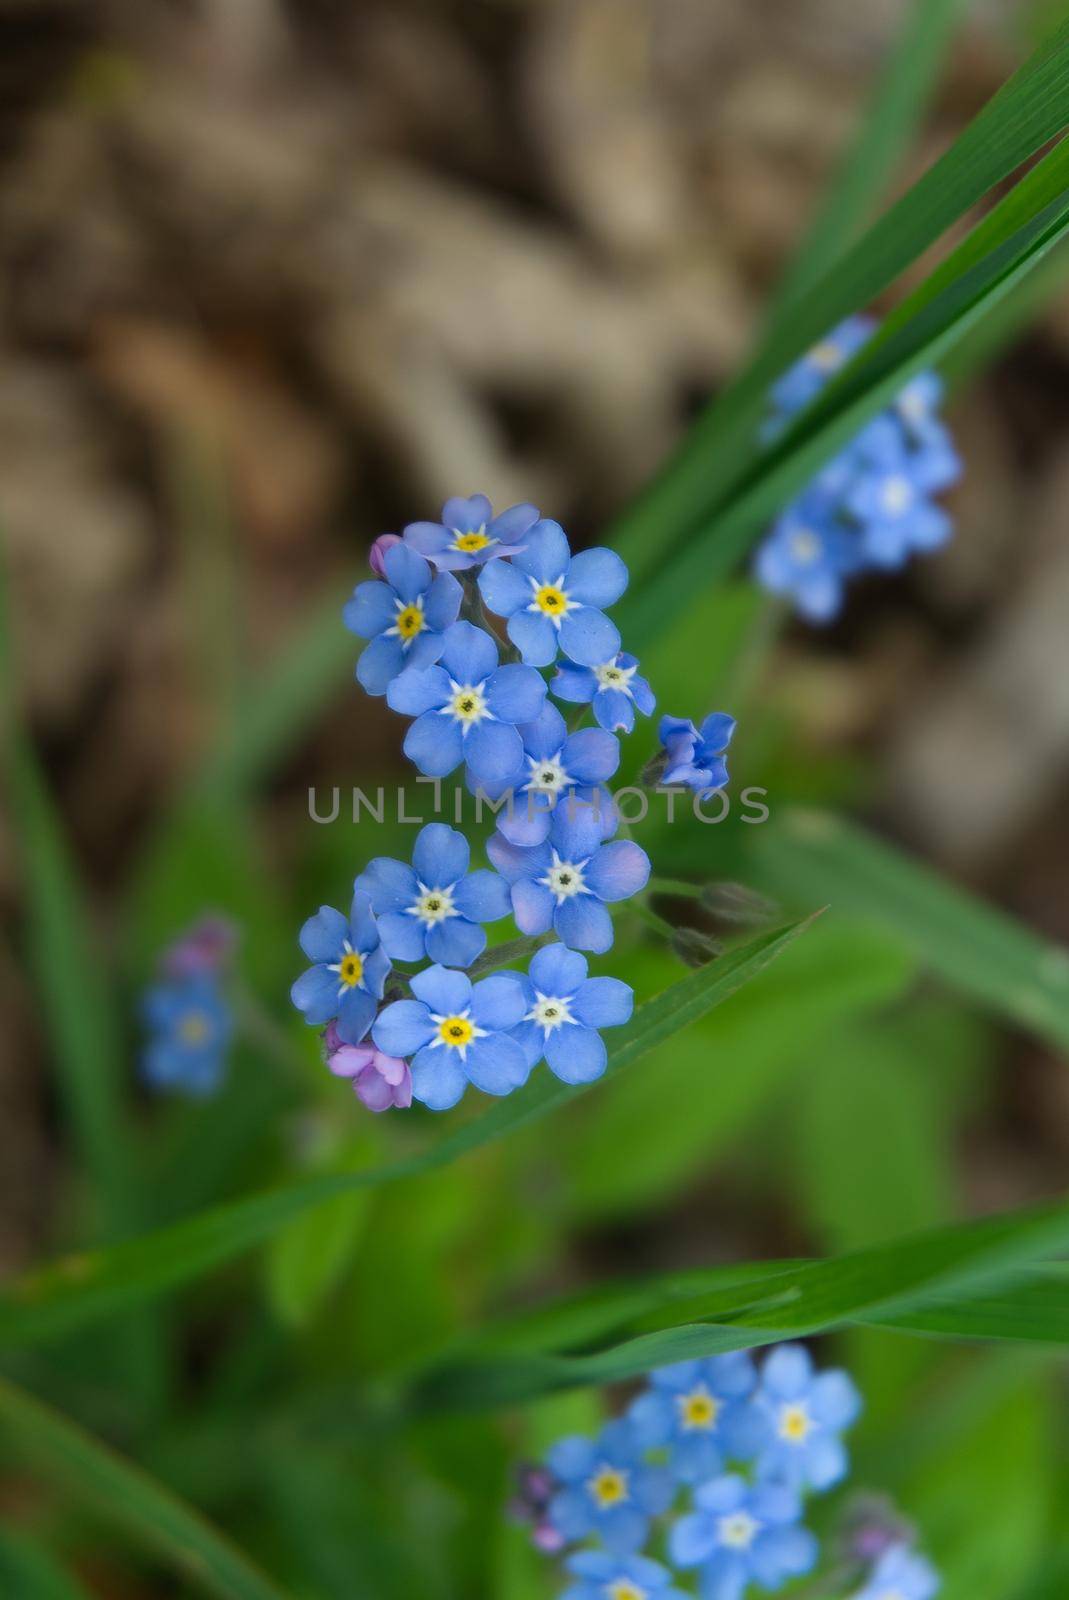 Myosotis alpestris - beautiful small blue flowers known as Forget Me Not